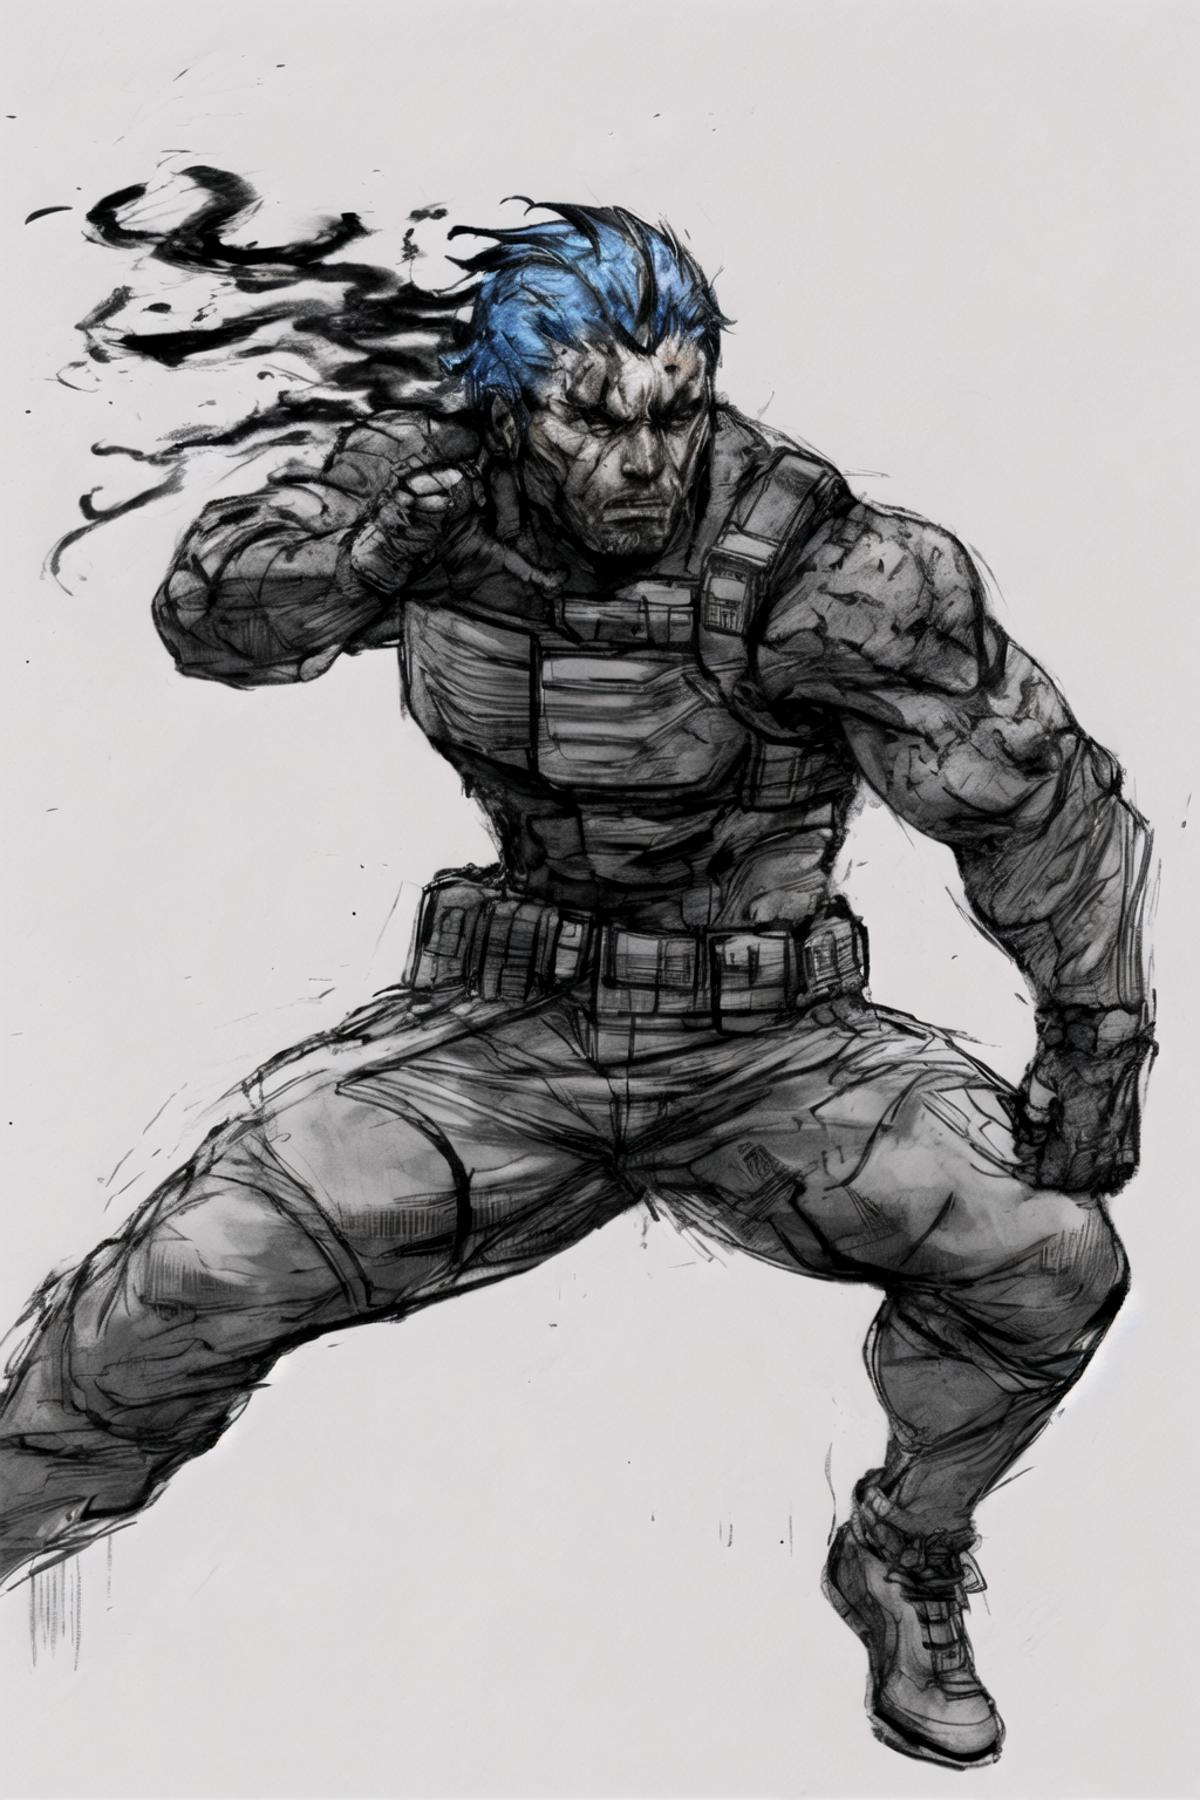 Yoji Shinkawa (Metal Gear Solid Concept Art) - Style - Shink4wa 